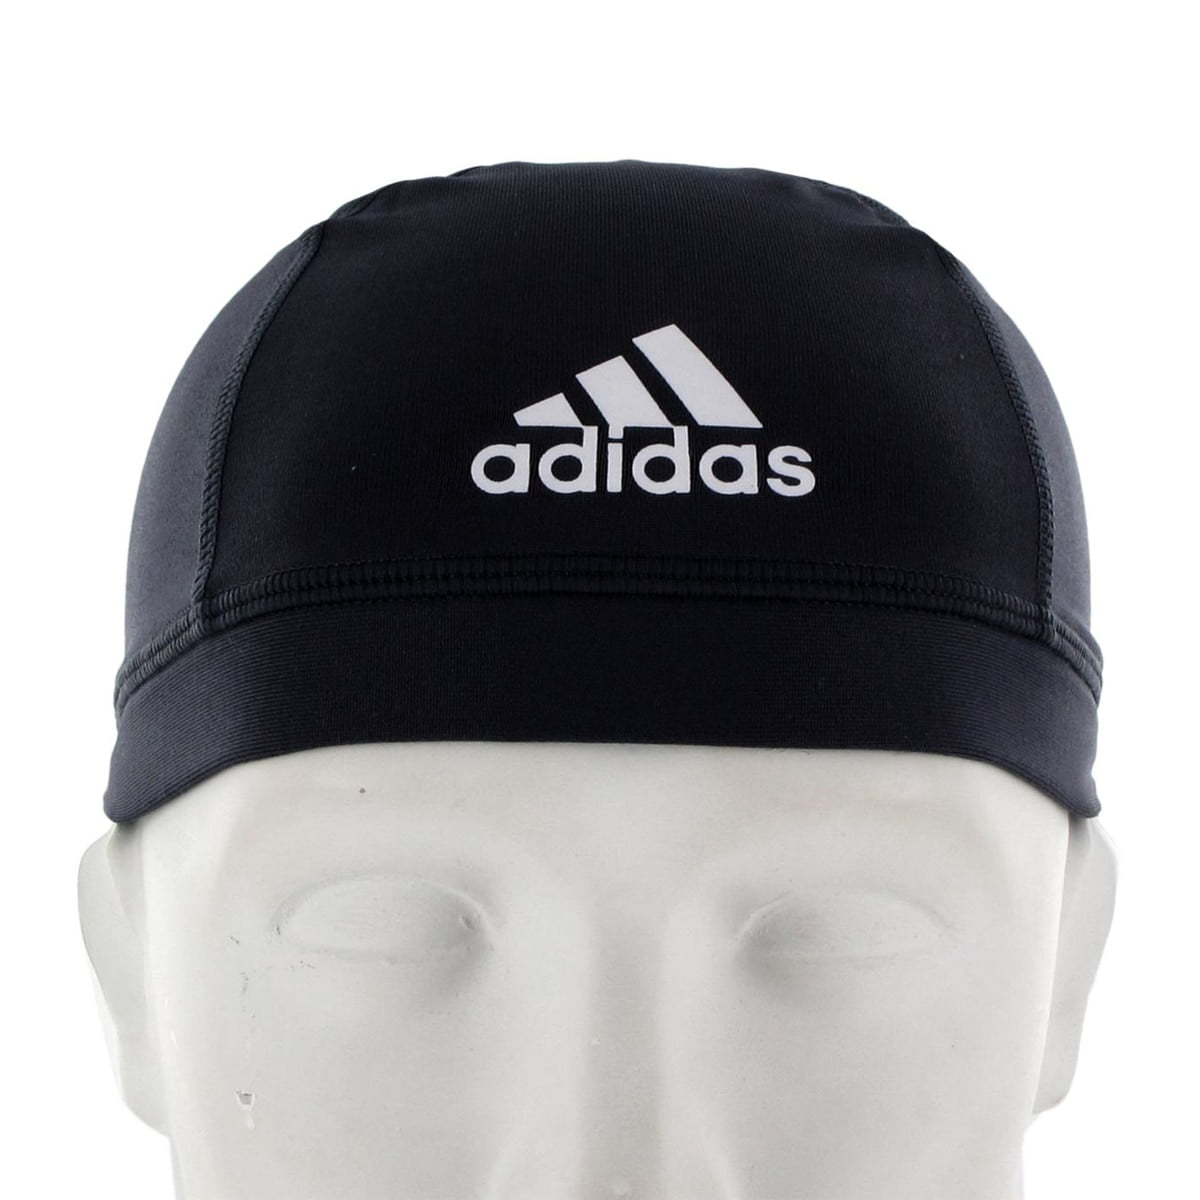 Adidas Football Skull Wrap Headband 